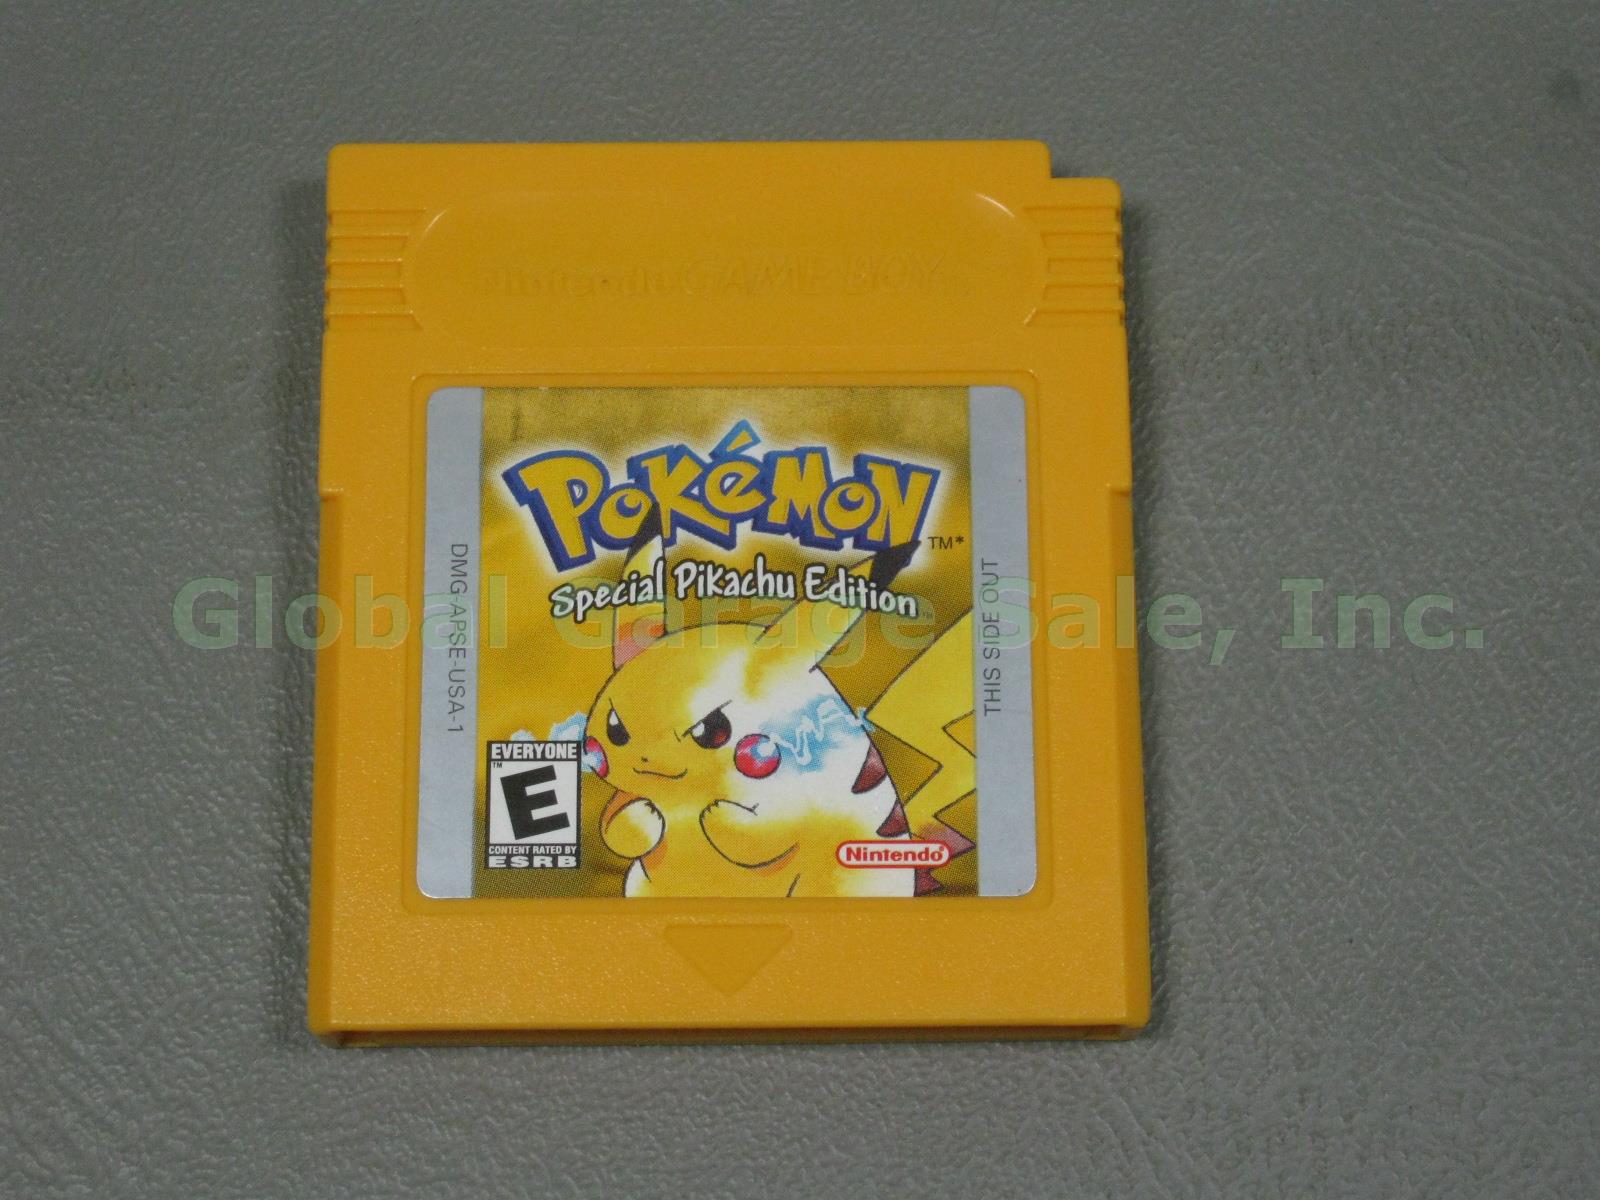 Nintendo Gameboy Game Pokemon Special Pikachu Edition Yellow Version + Box Guide 1